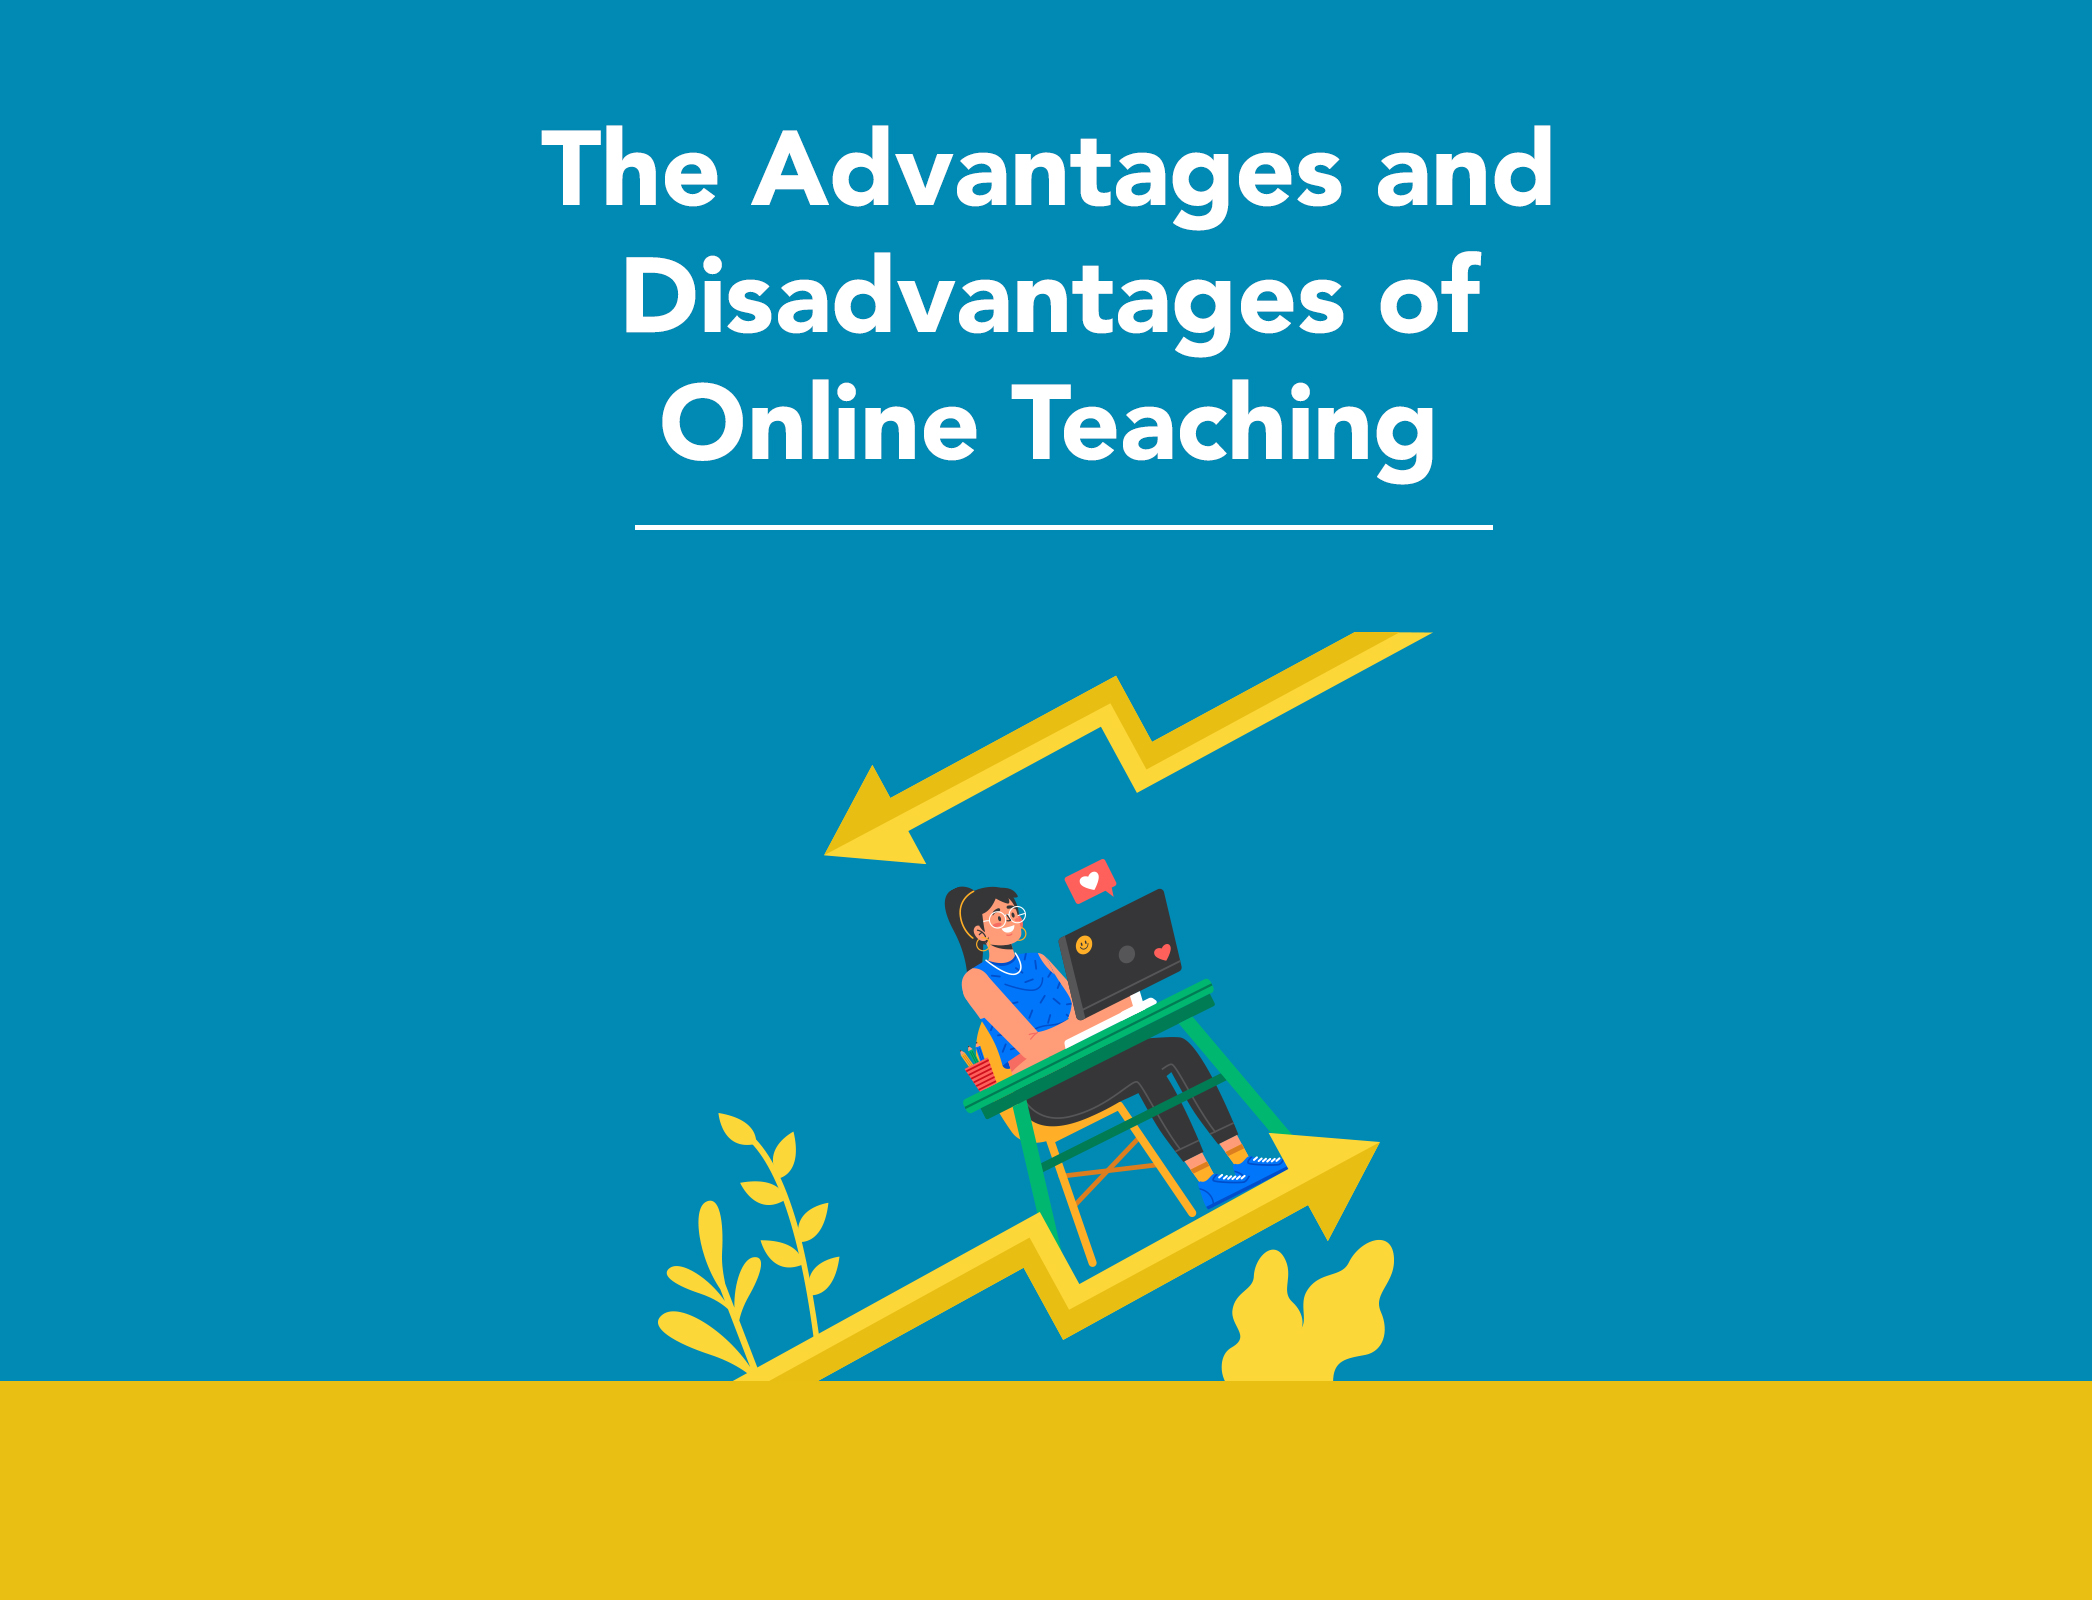 online teaching advantages and disadvantages essay